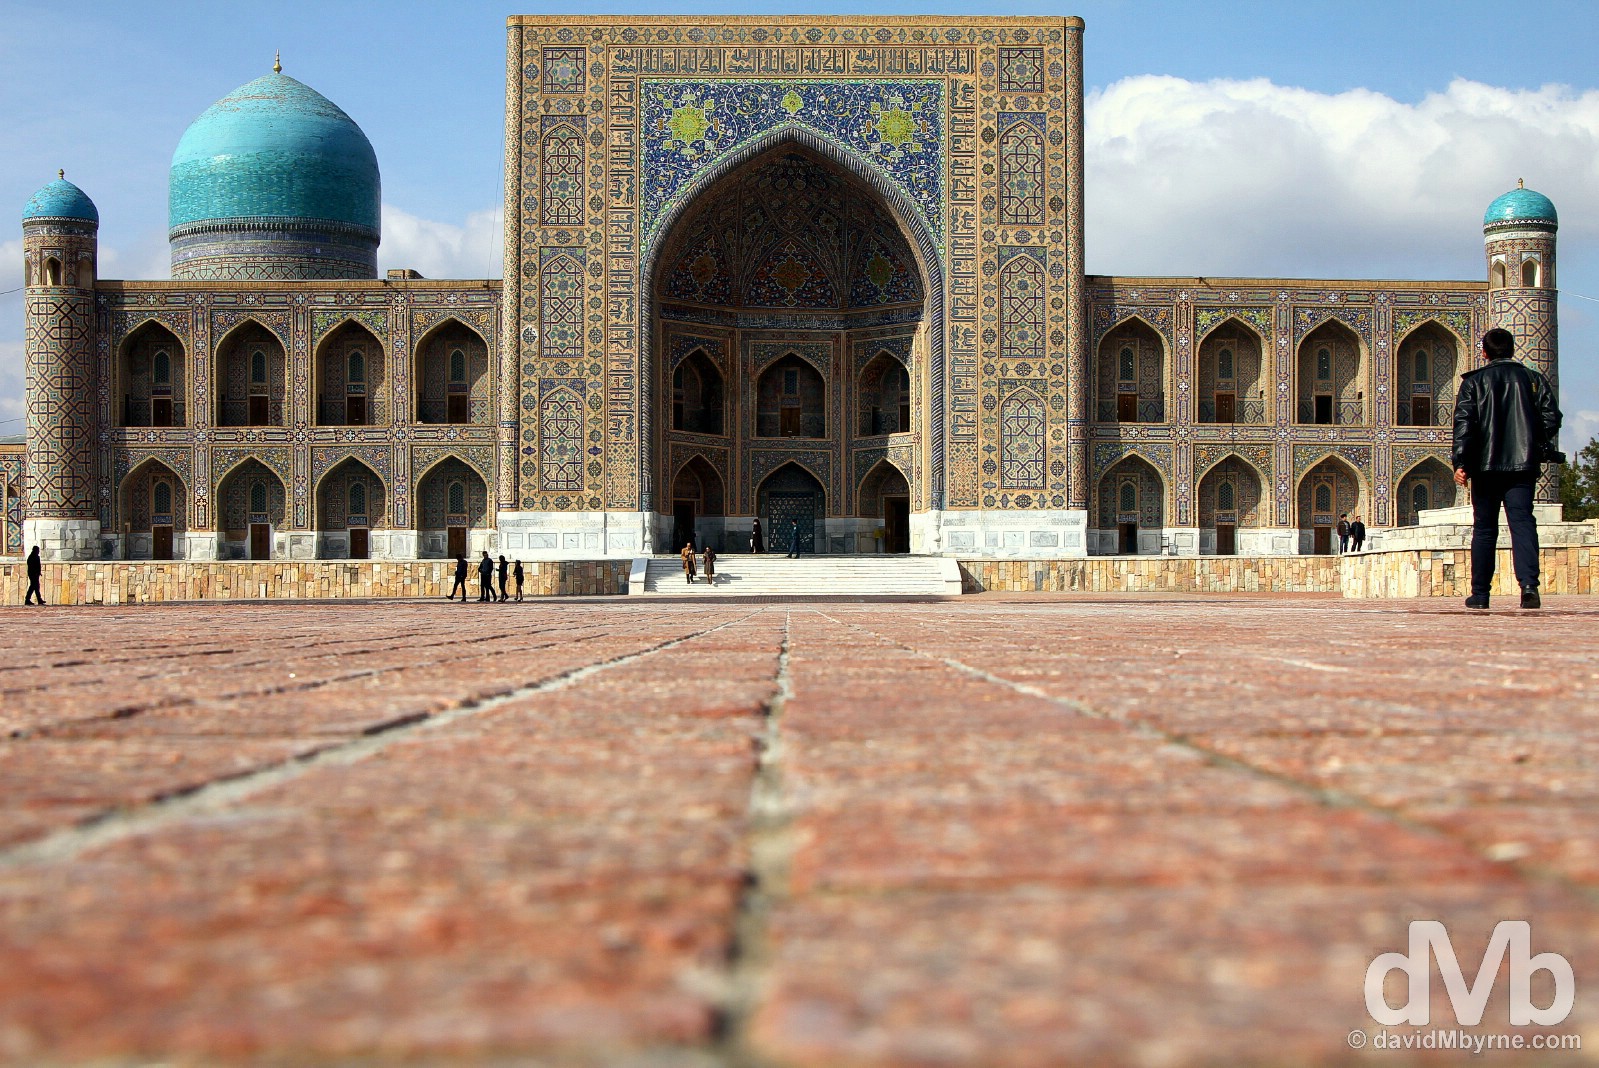 The Tilla-Kari Medressa of the Registan in Samarkand, Uzbekistan. March 8, 2015. 